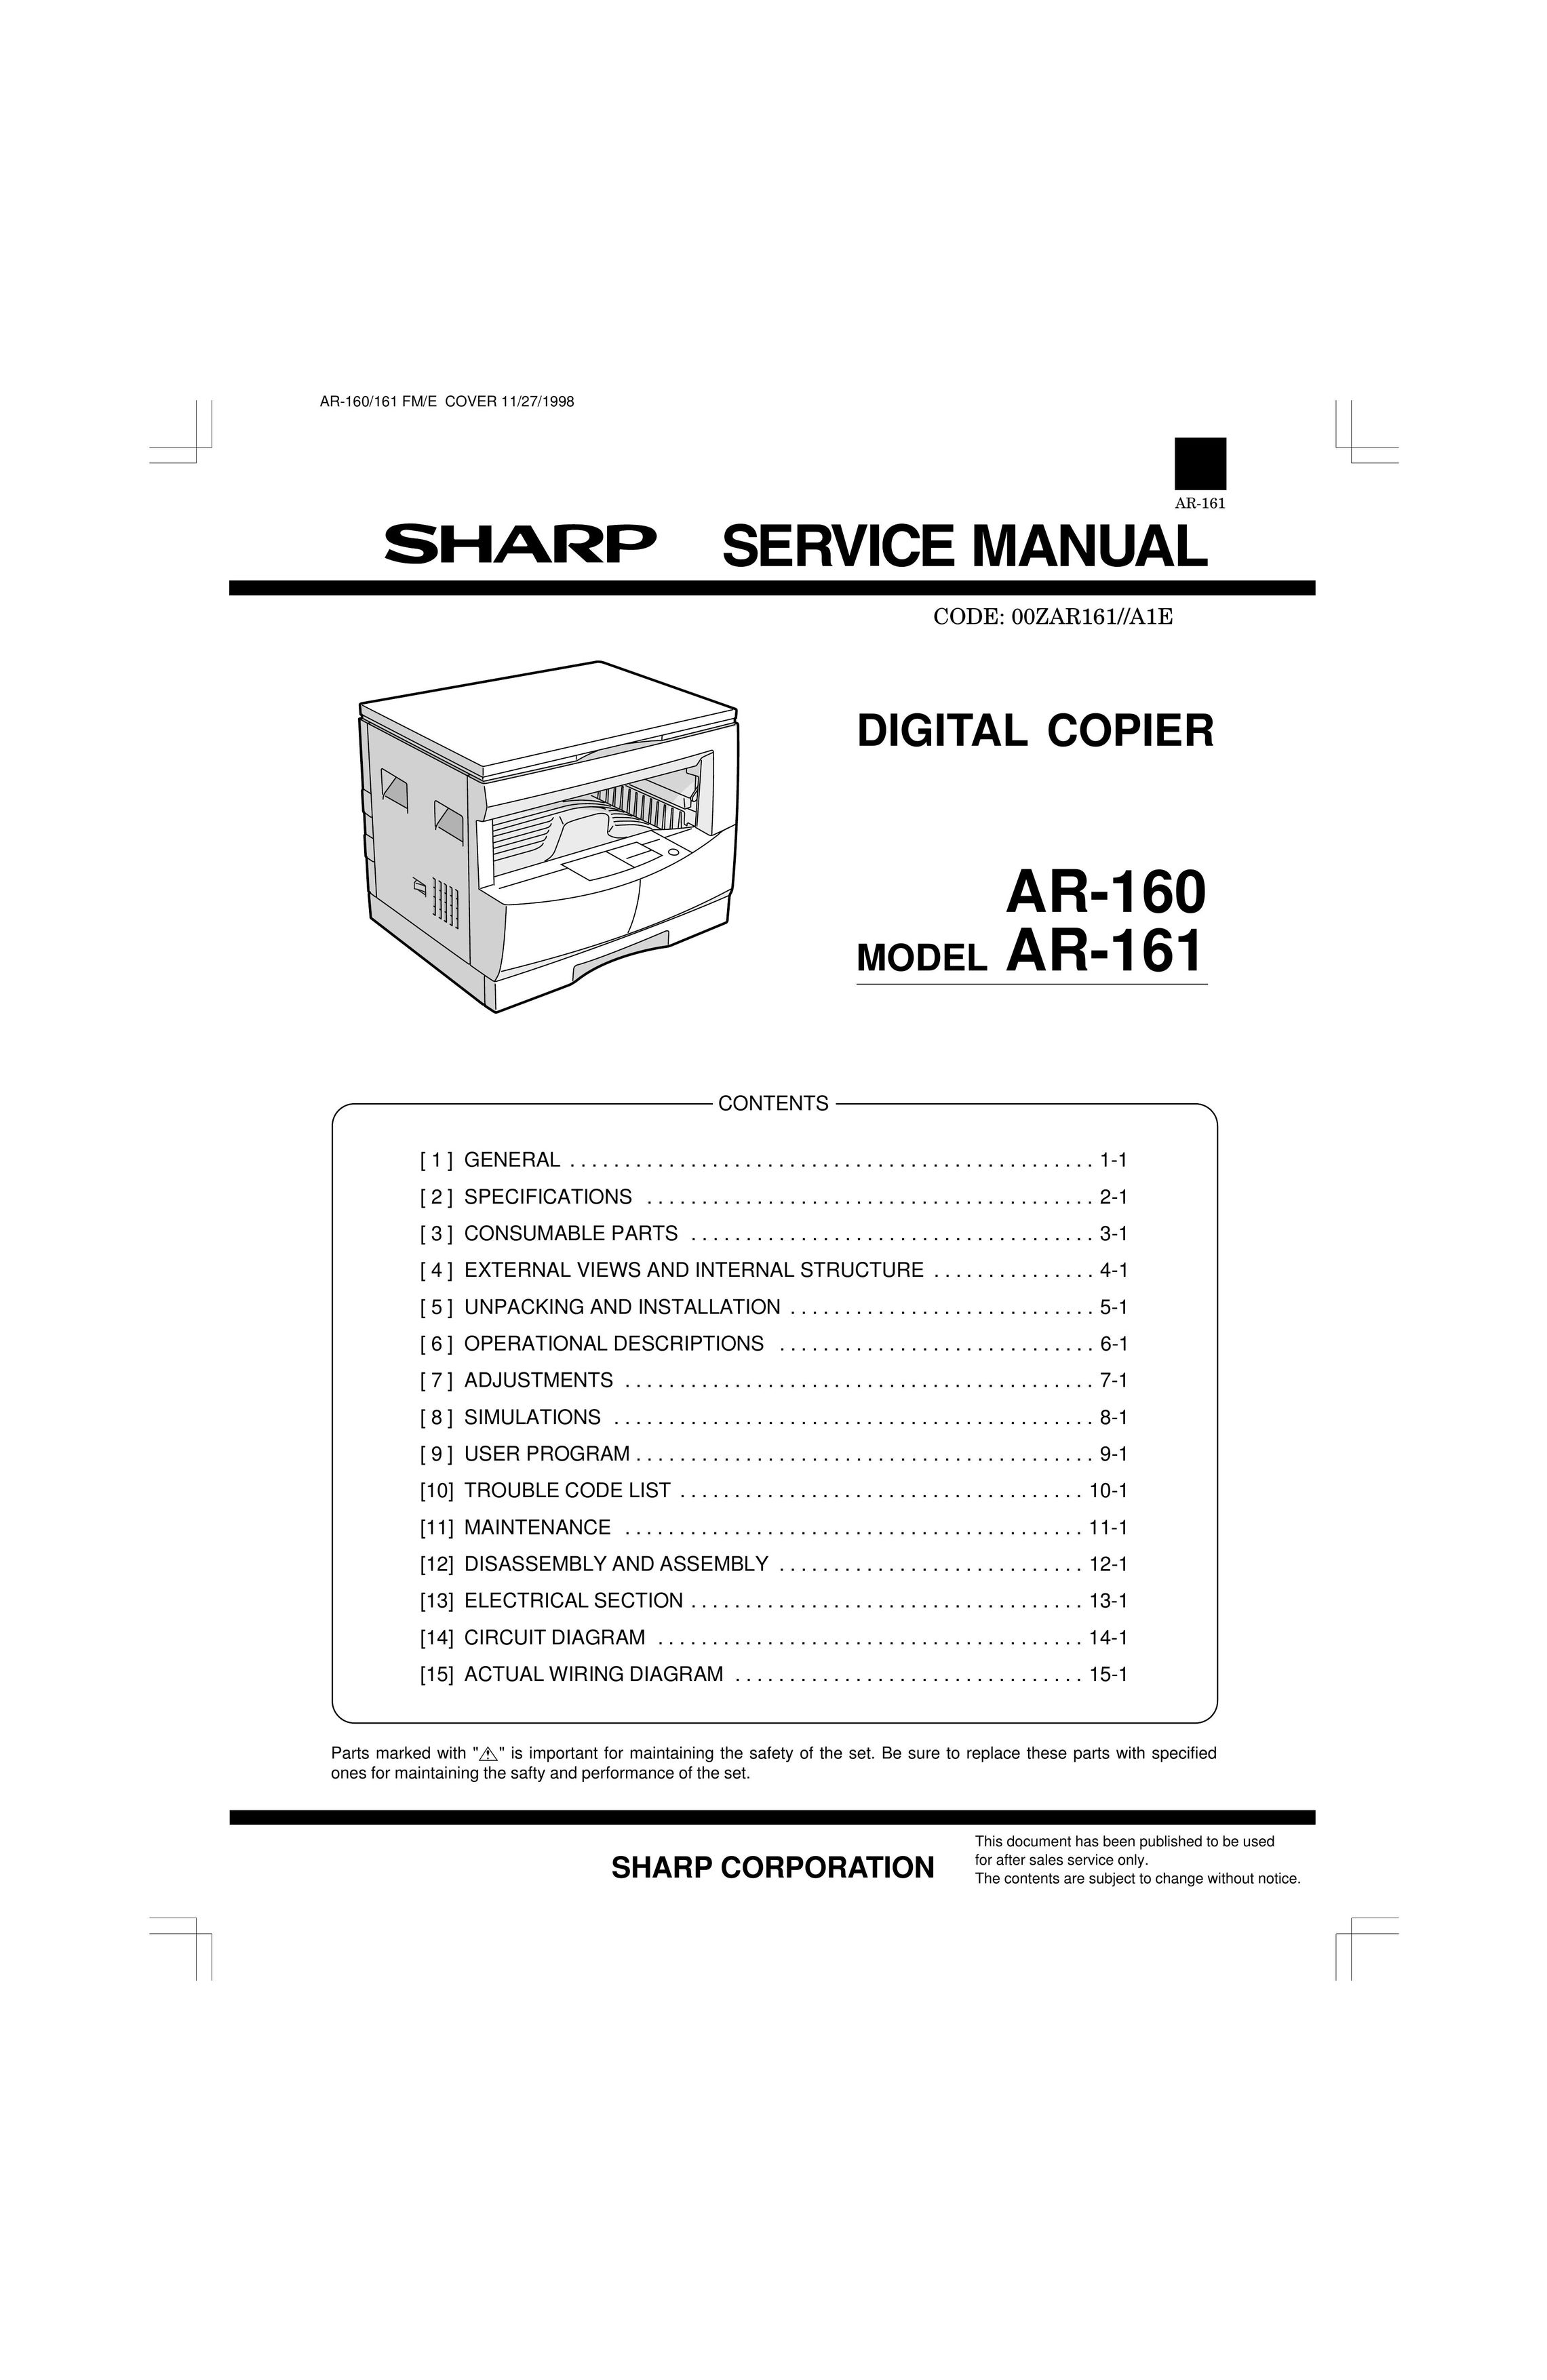 Sharp AR-161 Copier User Manual